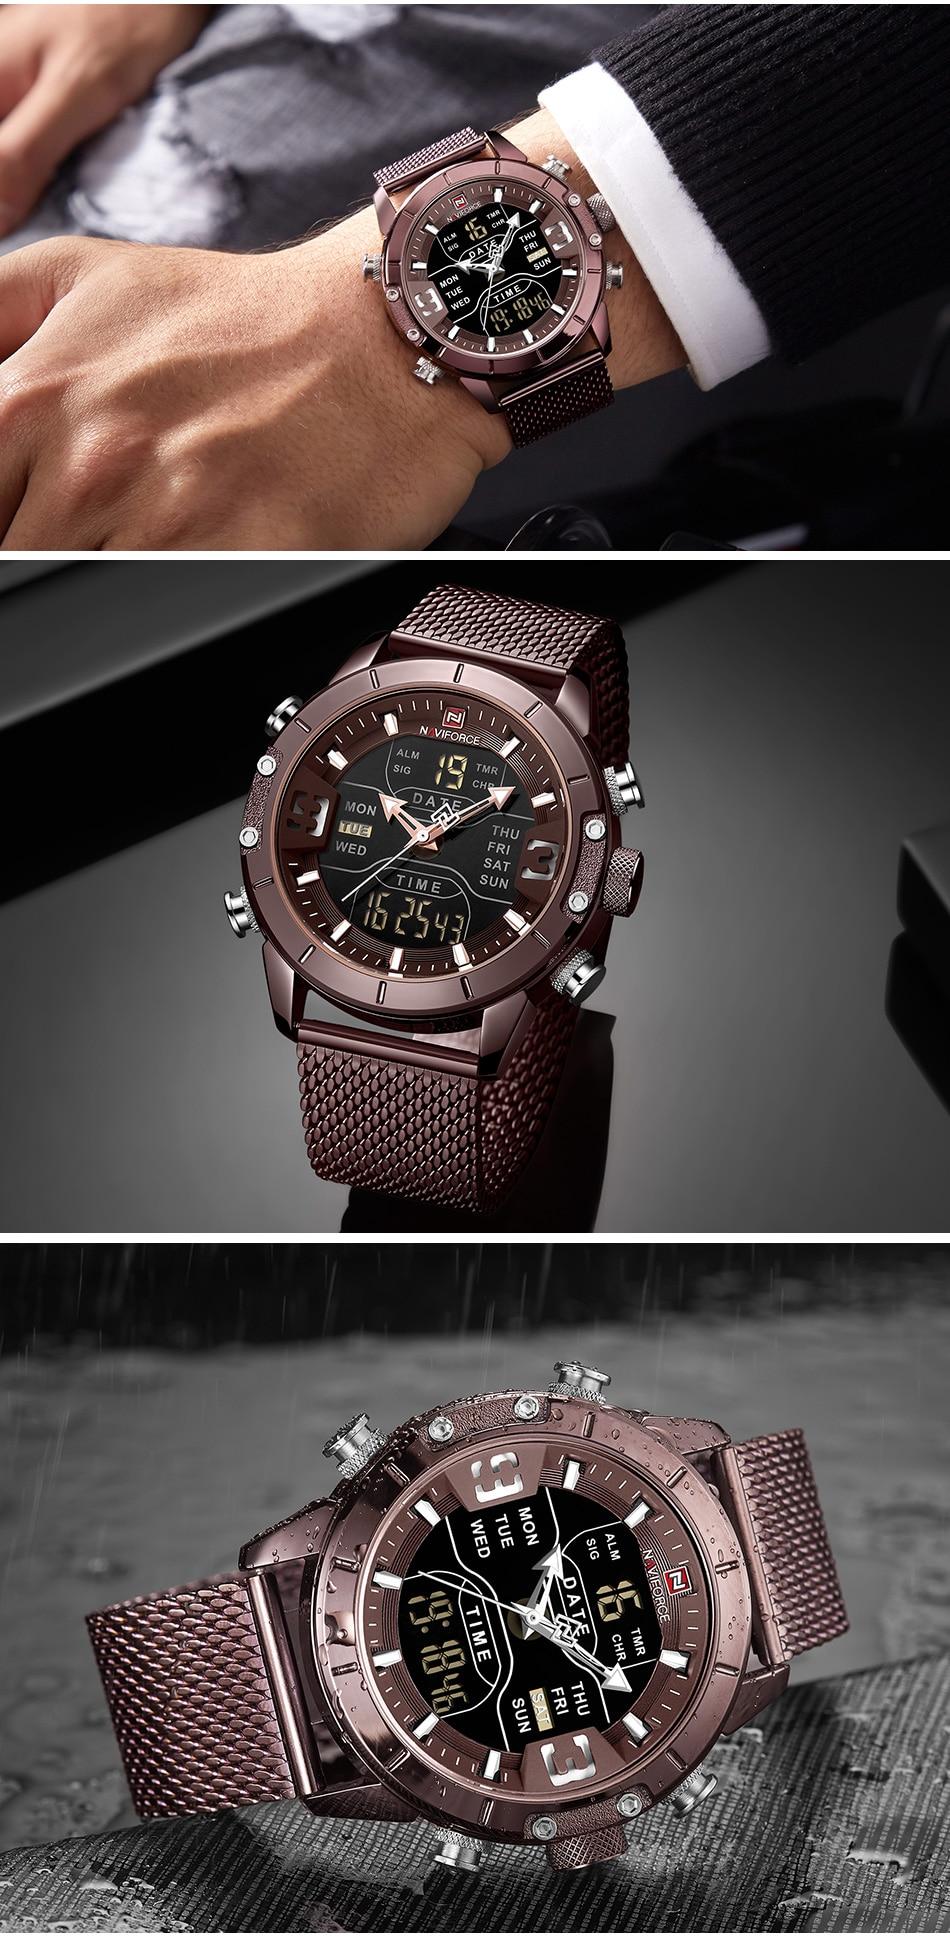 NAVIFORCE Men Watch Top Luxury Brand Man Military Sport Quartz Wrist Watches Stainless Steel LED Digital Clock Relogio Masculino